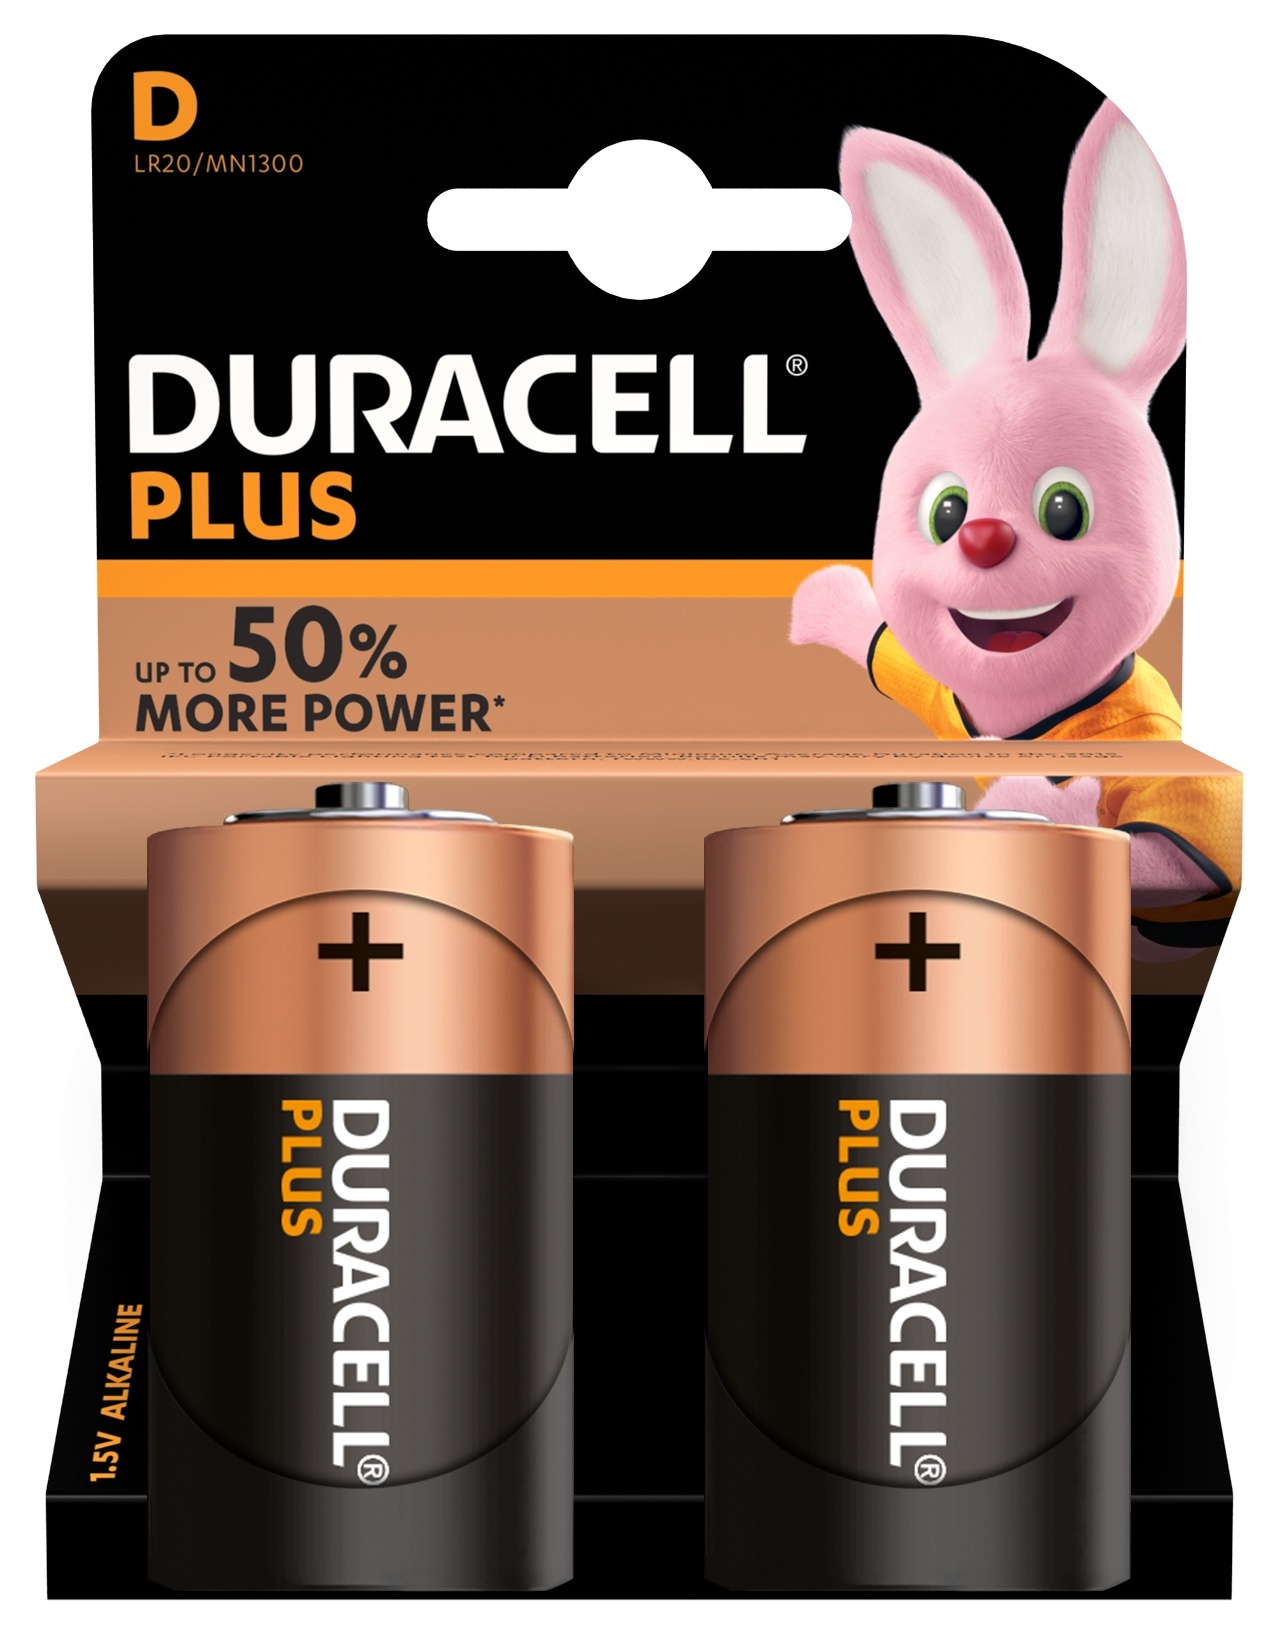 Batterie alcaline D 1.5 V